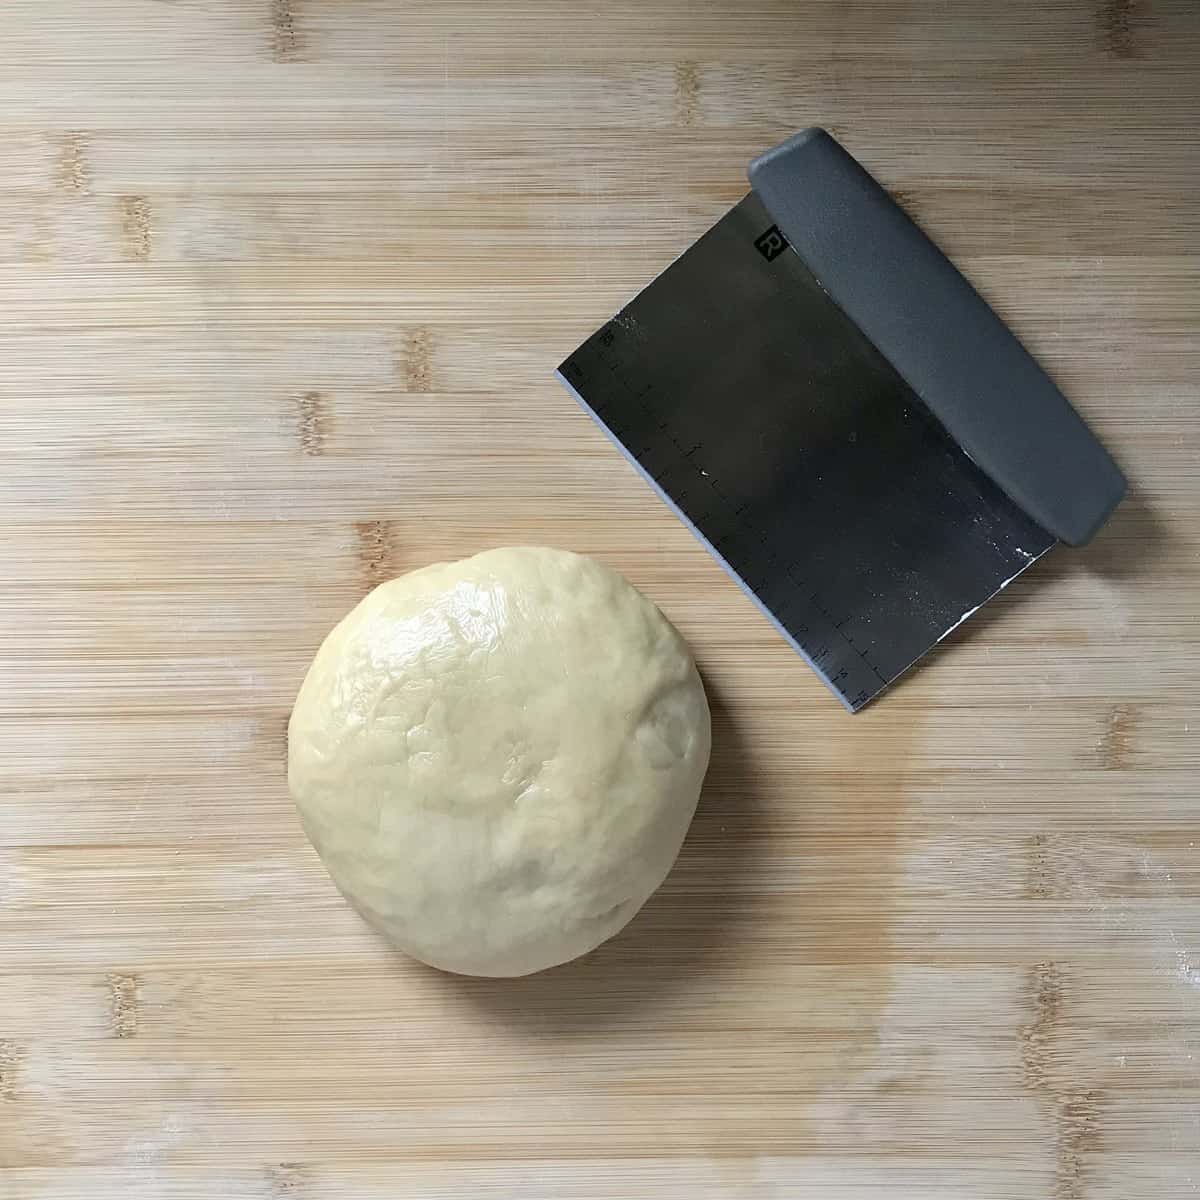 A ball of struffoli dough next to a dough scraper.